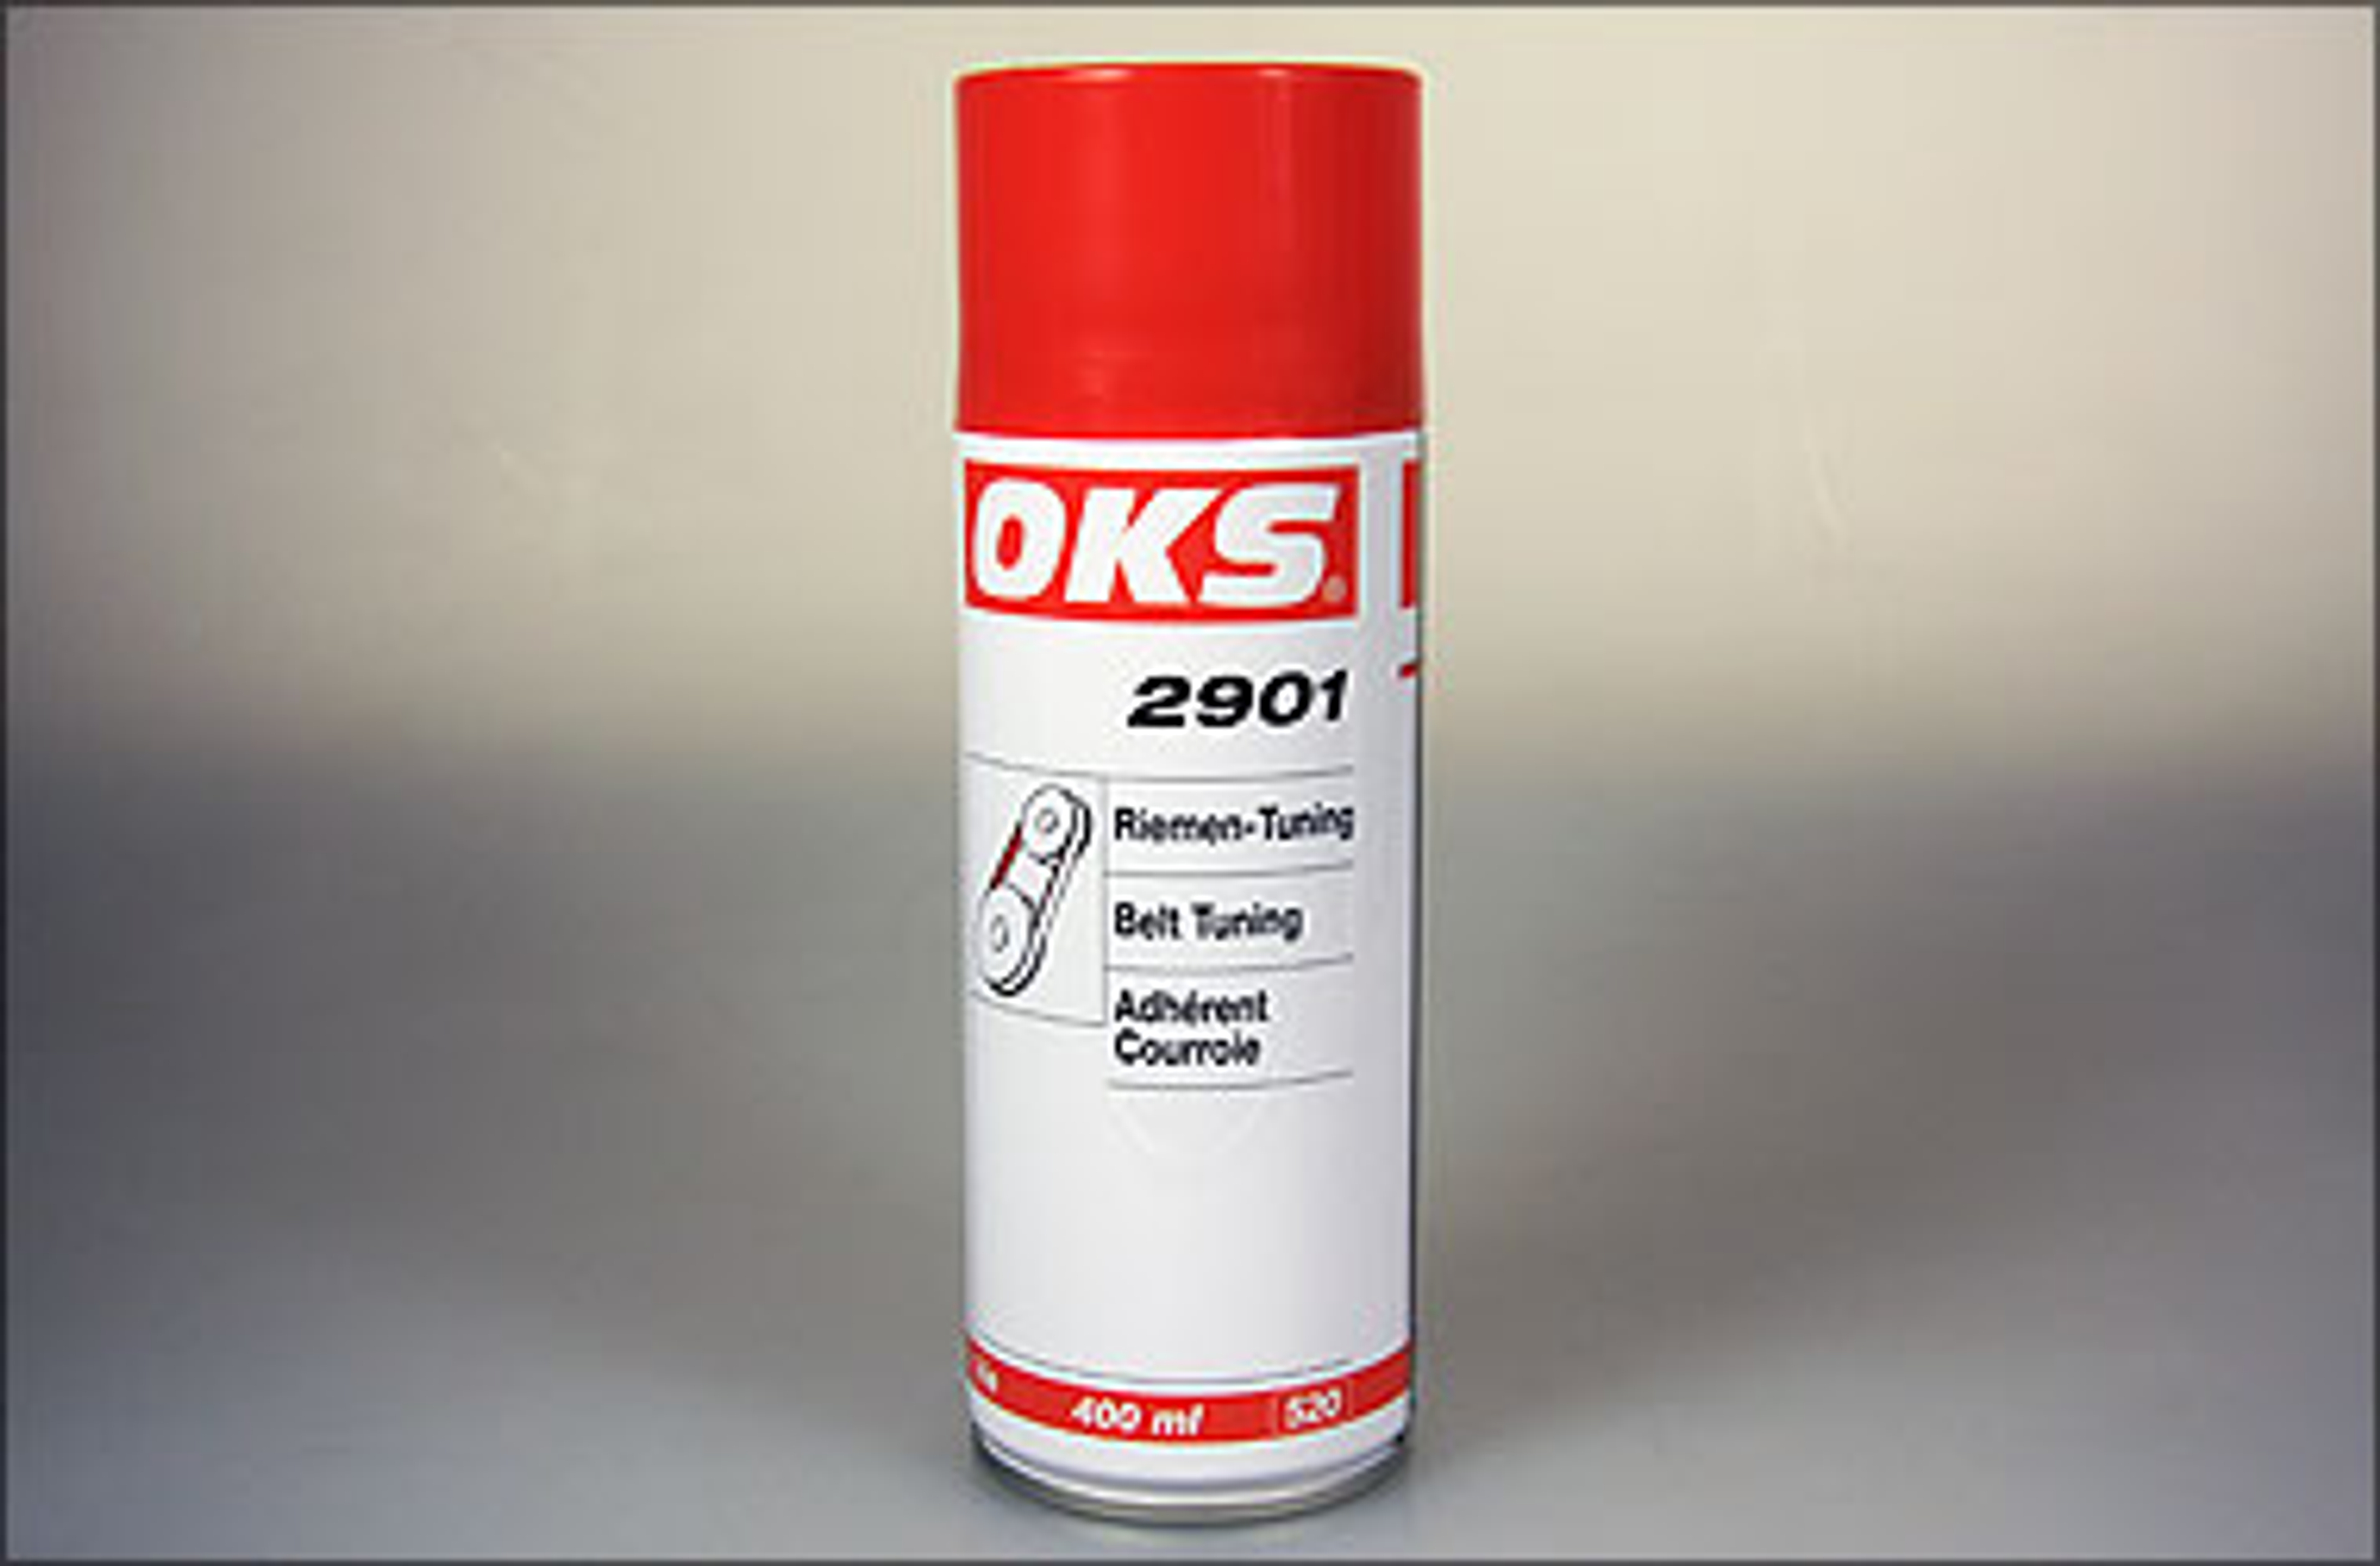 OKS 2901 Belt tuning spray 400 ml, 1 pce.